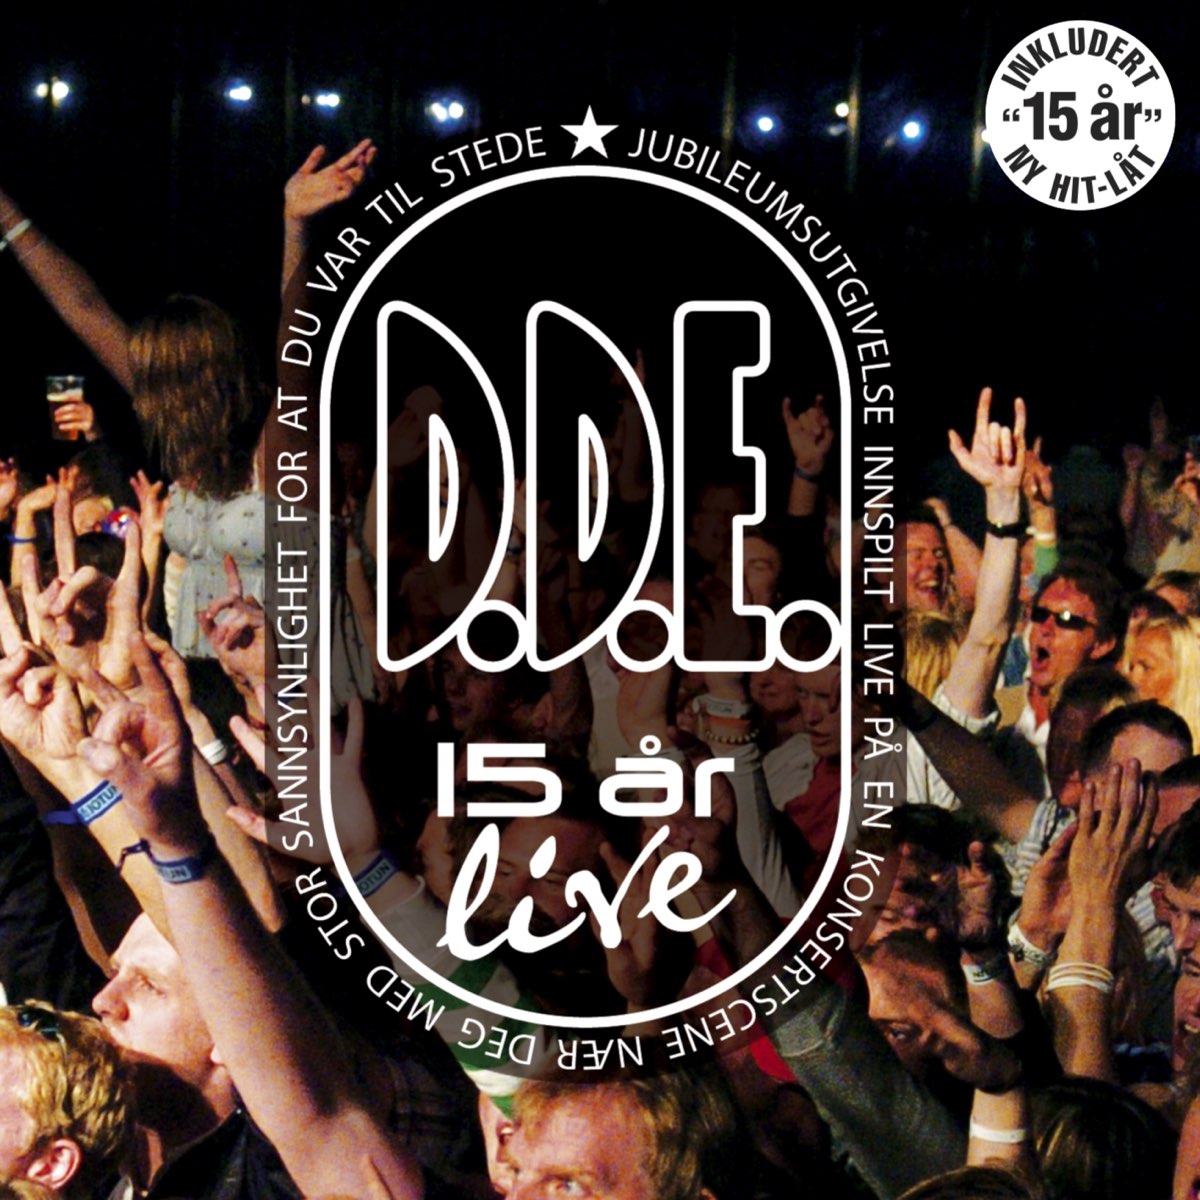 15 år - Live by D.D.E. on